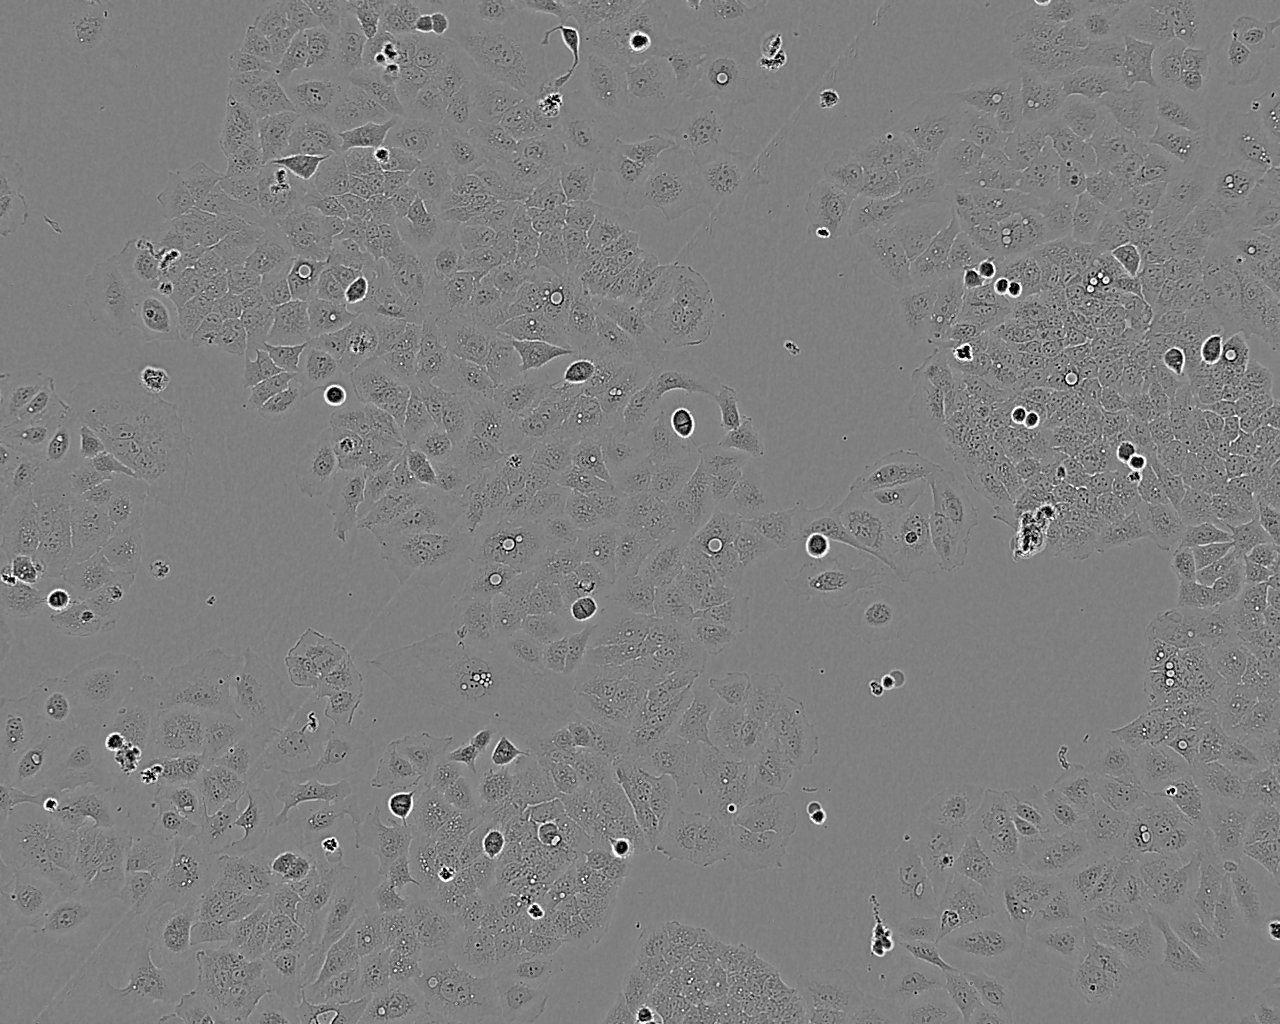 NeHepLxHT Cell:人正常干细胞系